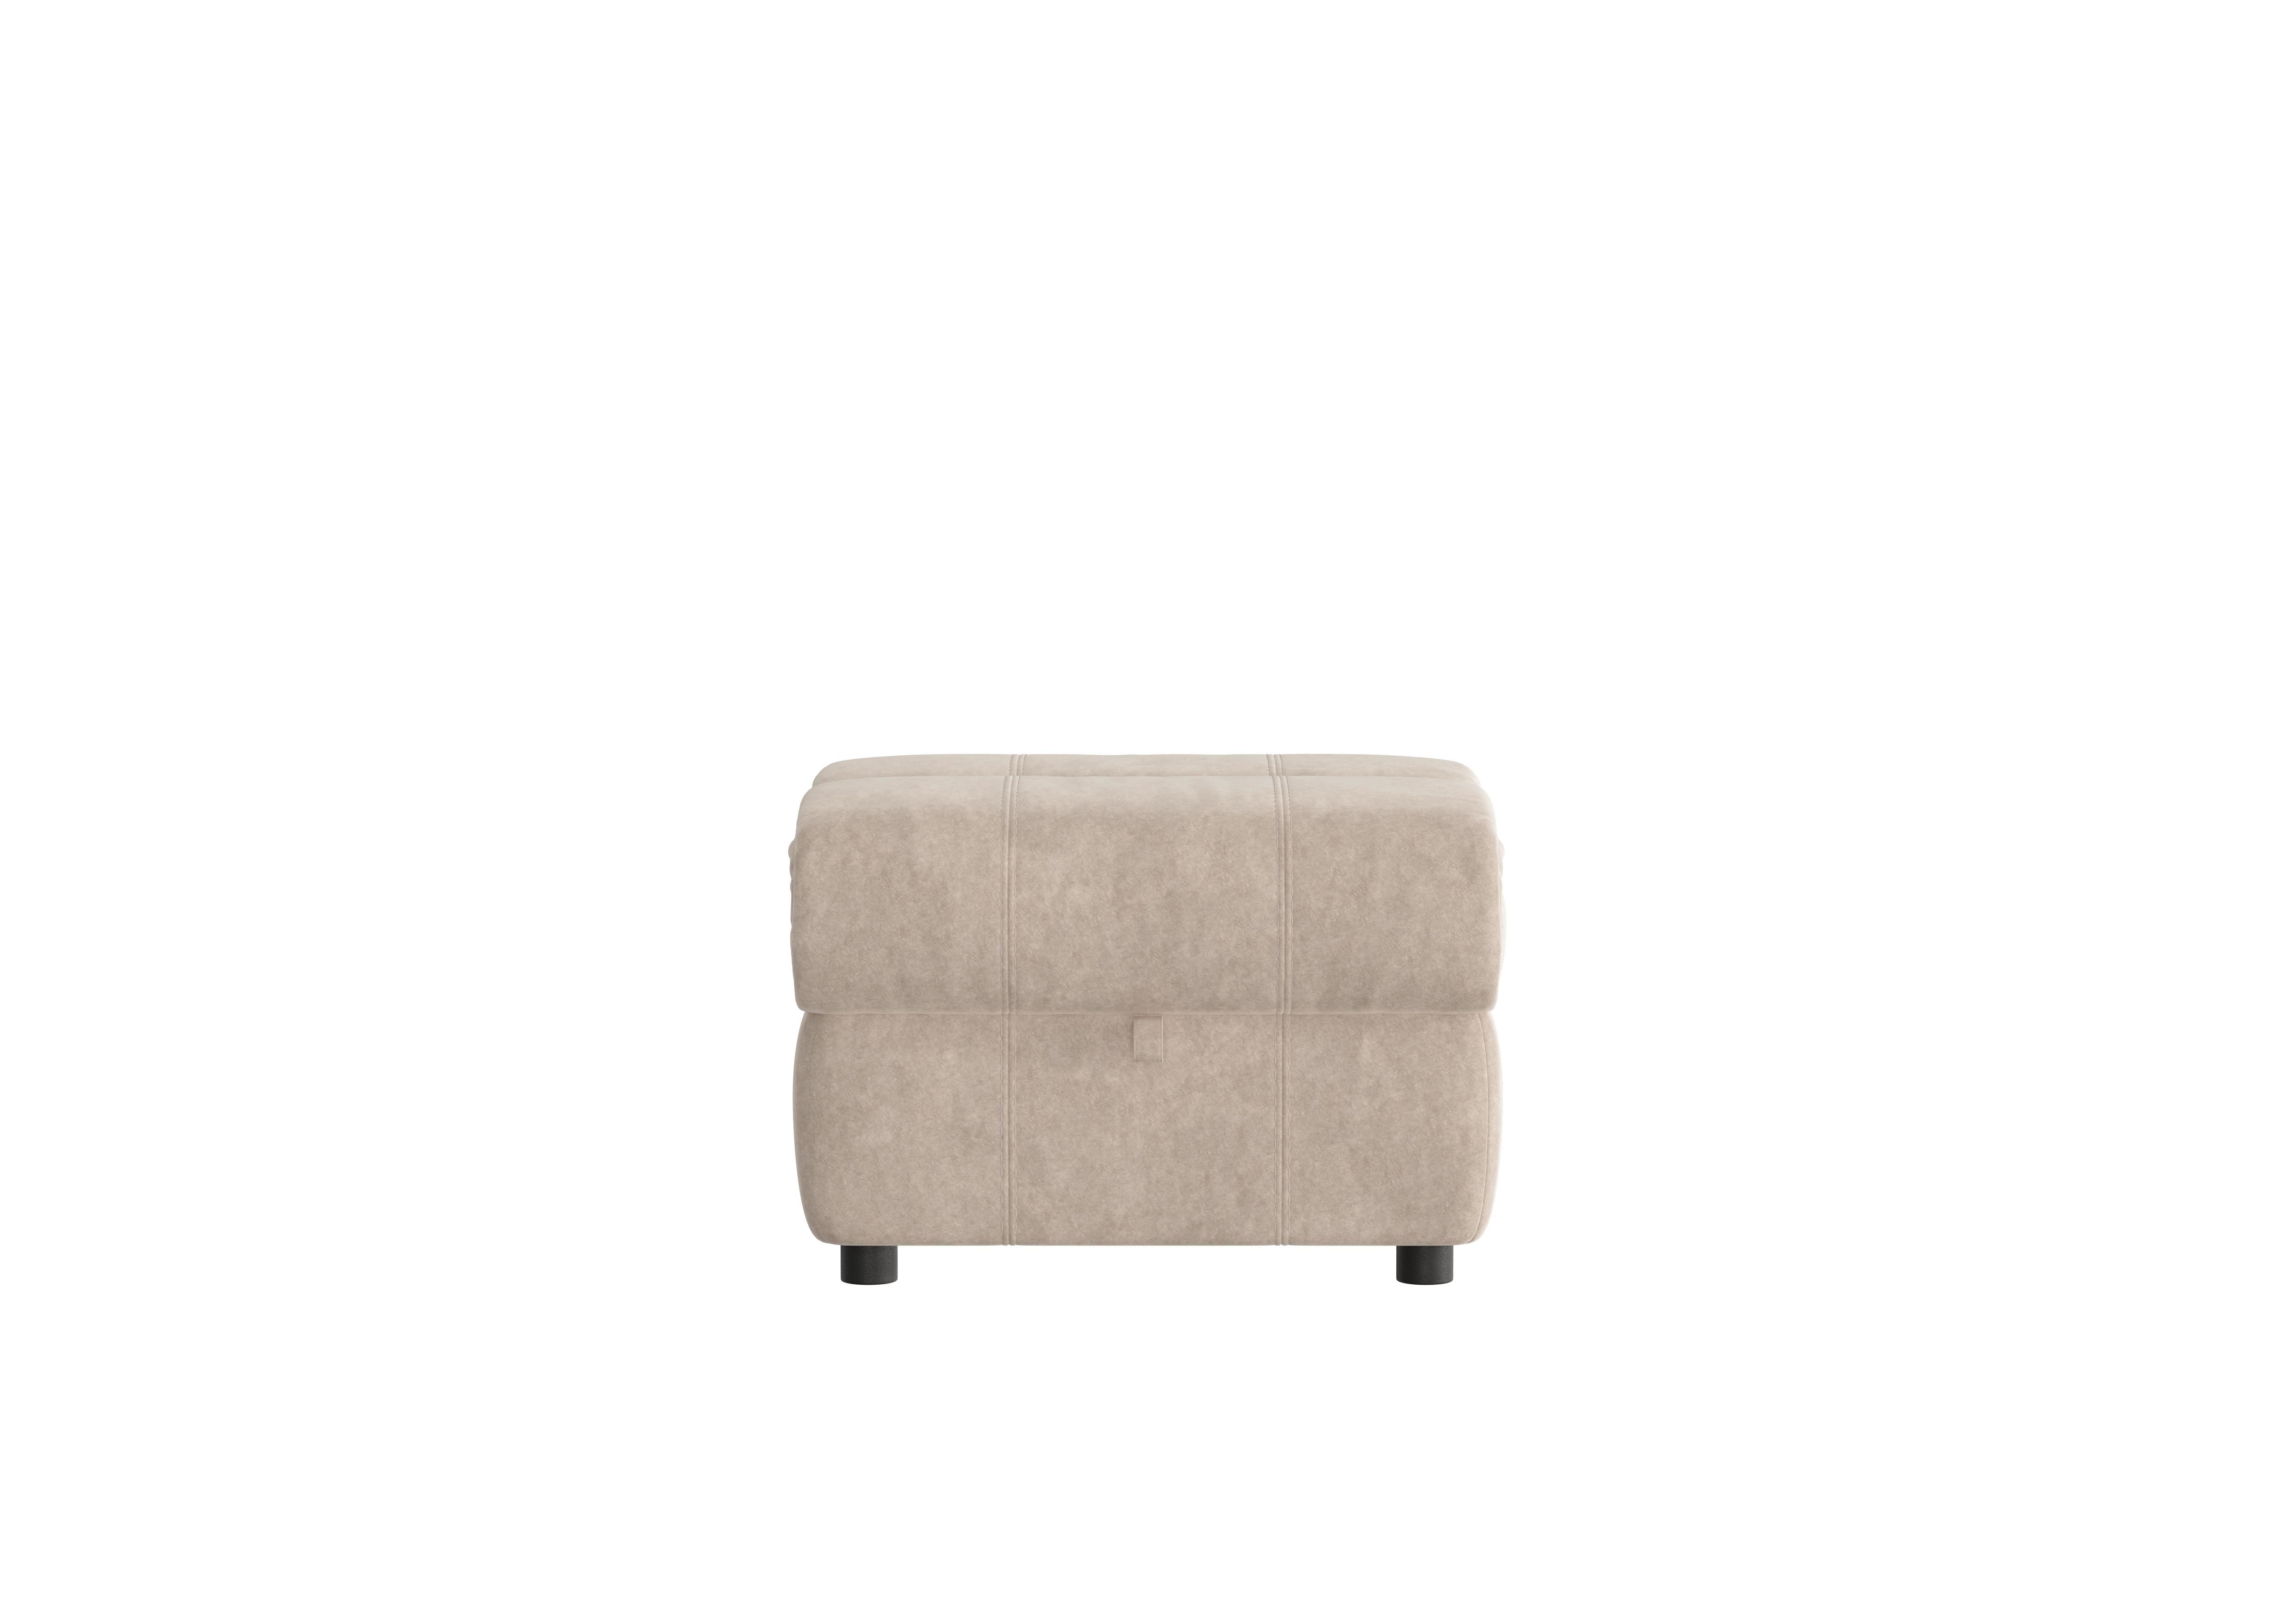 Link Fabric Footstool in Bfa-Bnn-R26 Fv2 Cream on Furniture Village